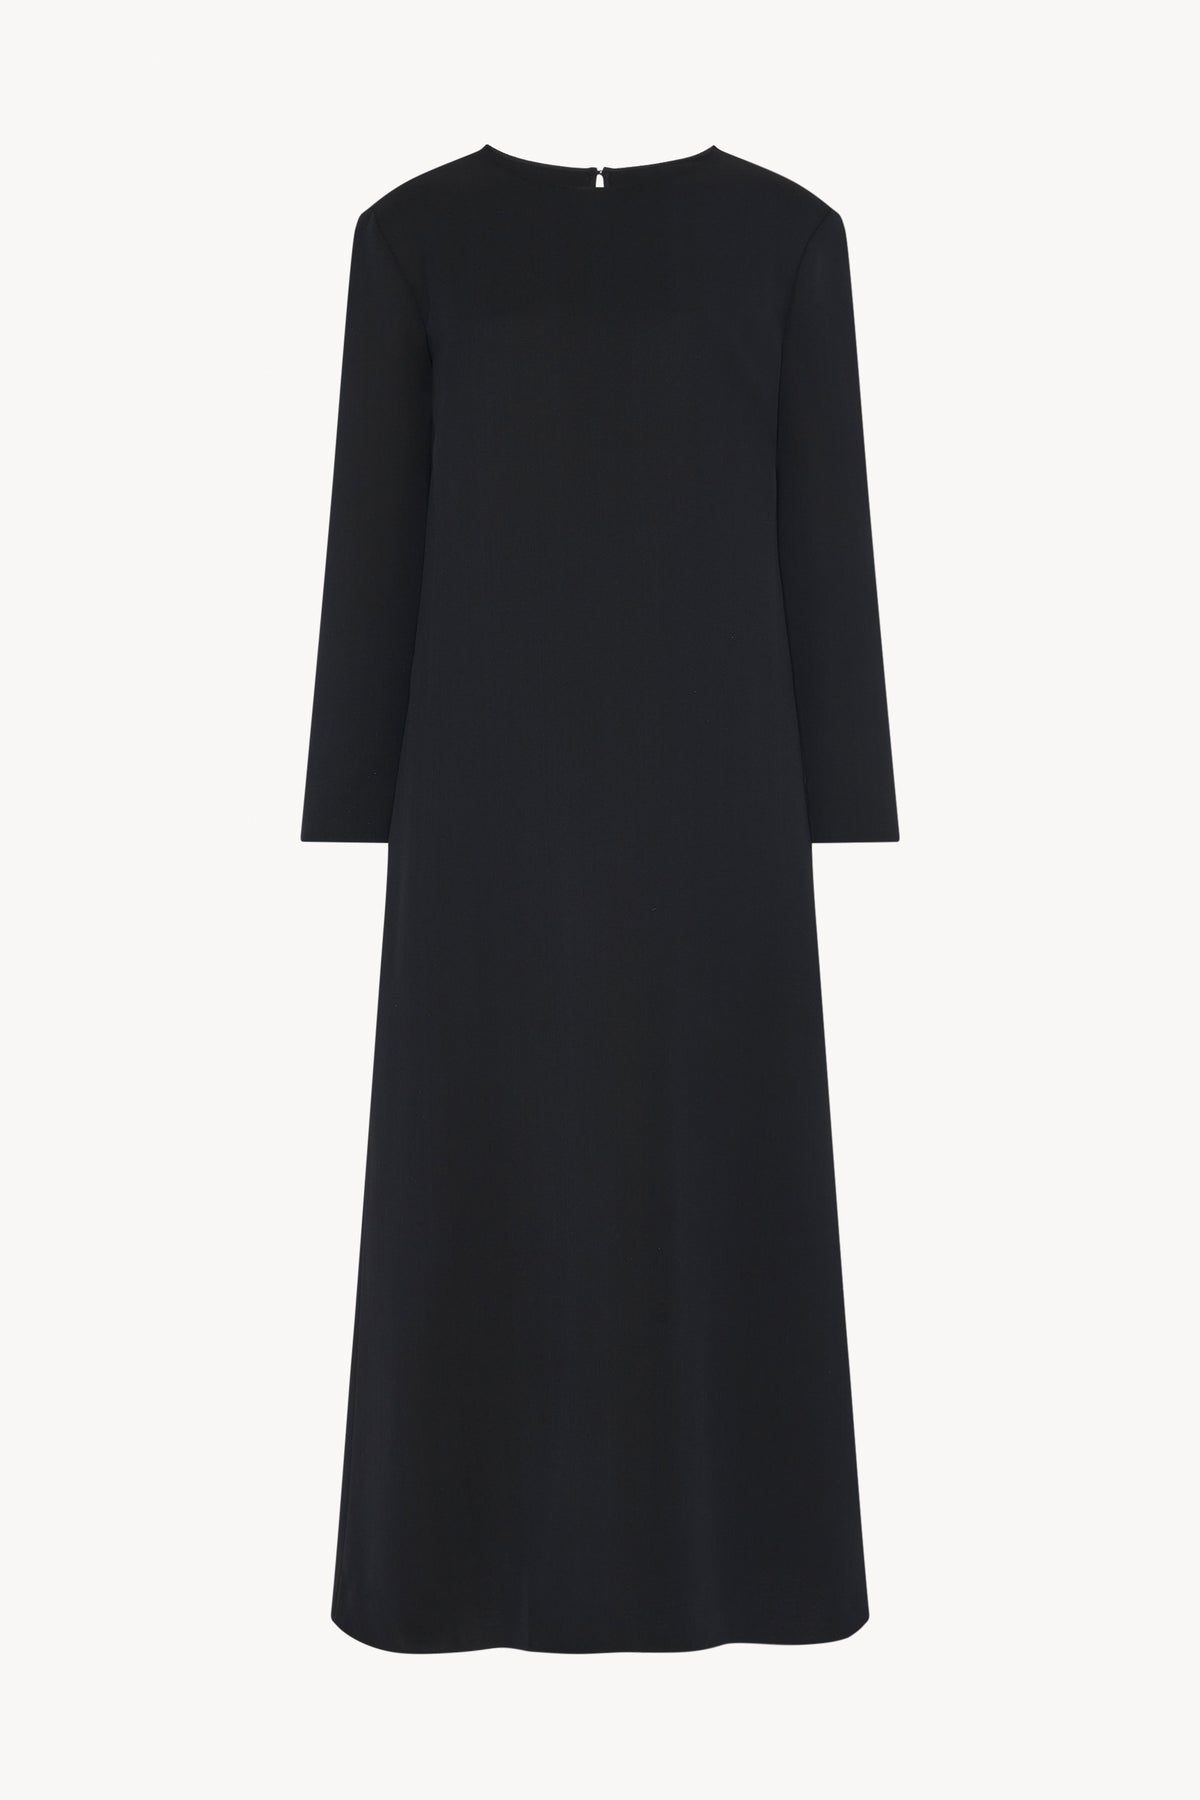 Lucinda Dress in Silk and Virgin Wool